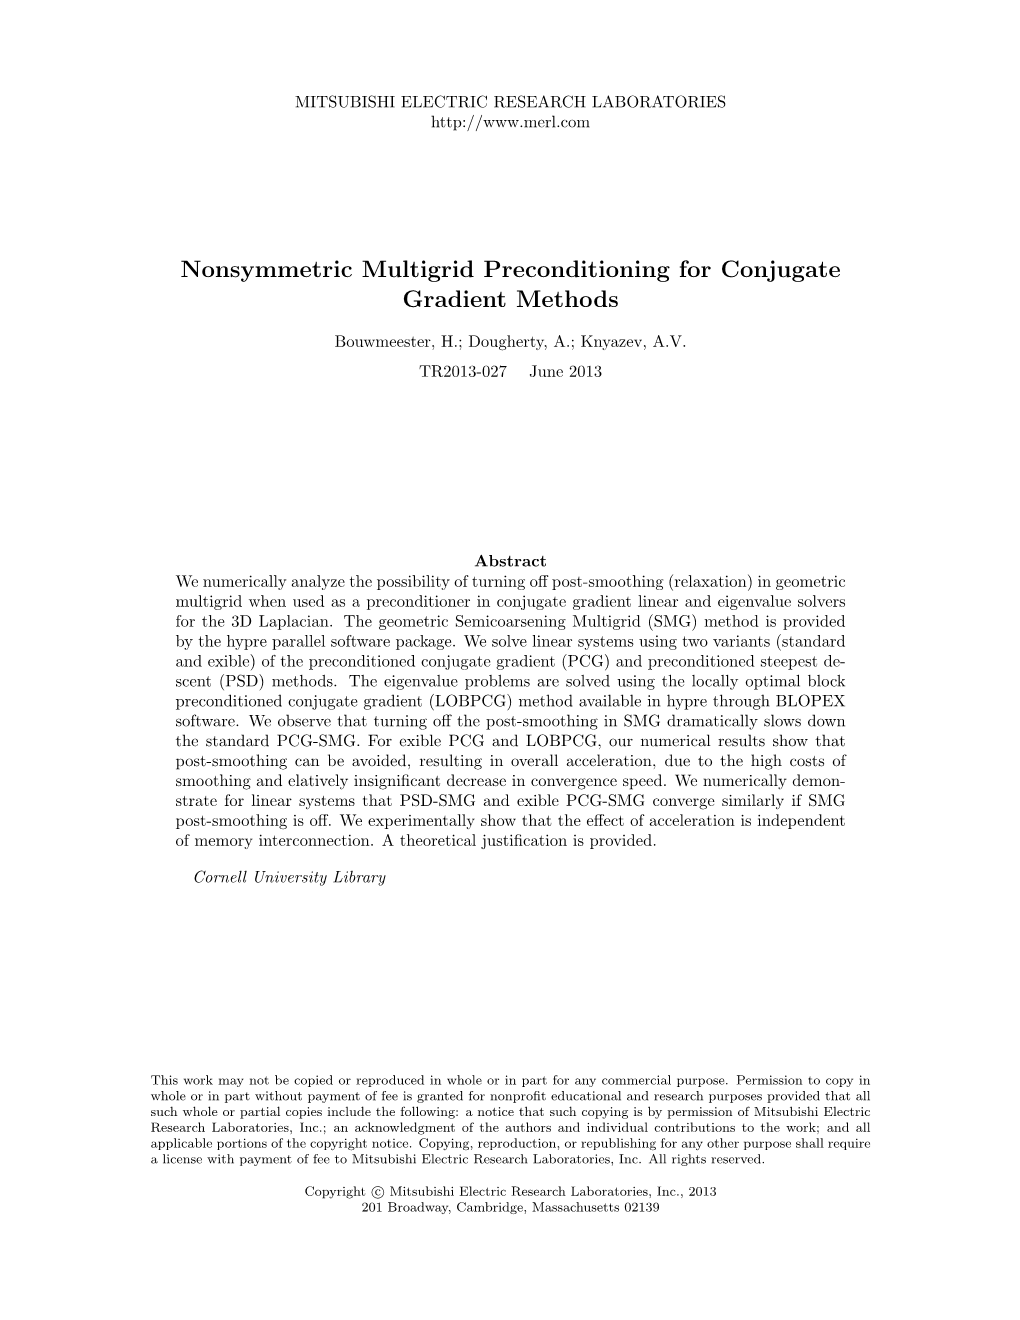 Nonsymmetric Multigrid Preconditioning for Conjugate Gradient Methods